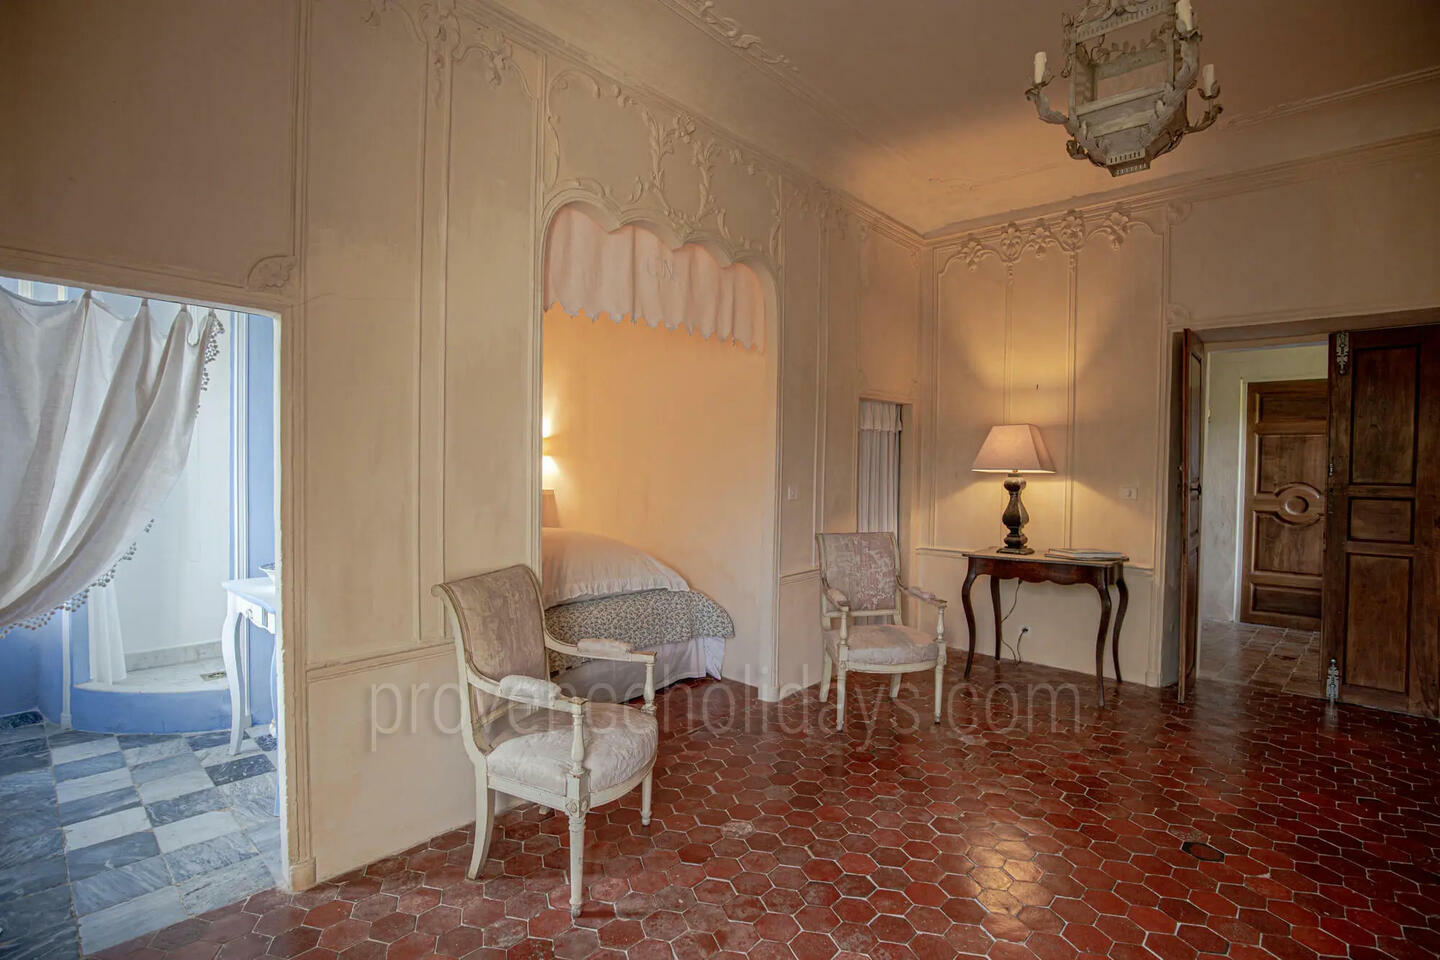 80 - Château de Gignac: Villa: Interior